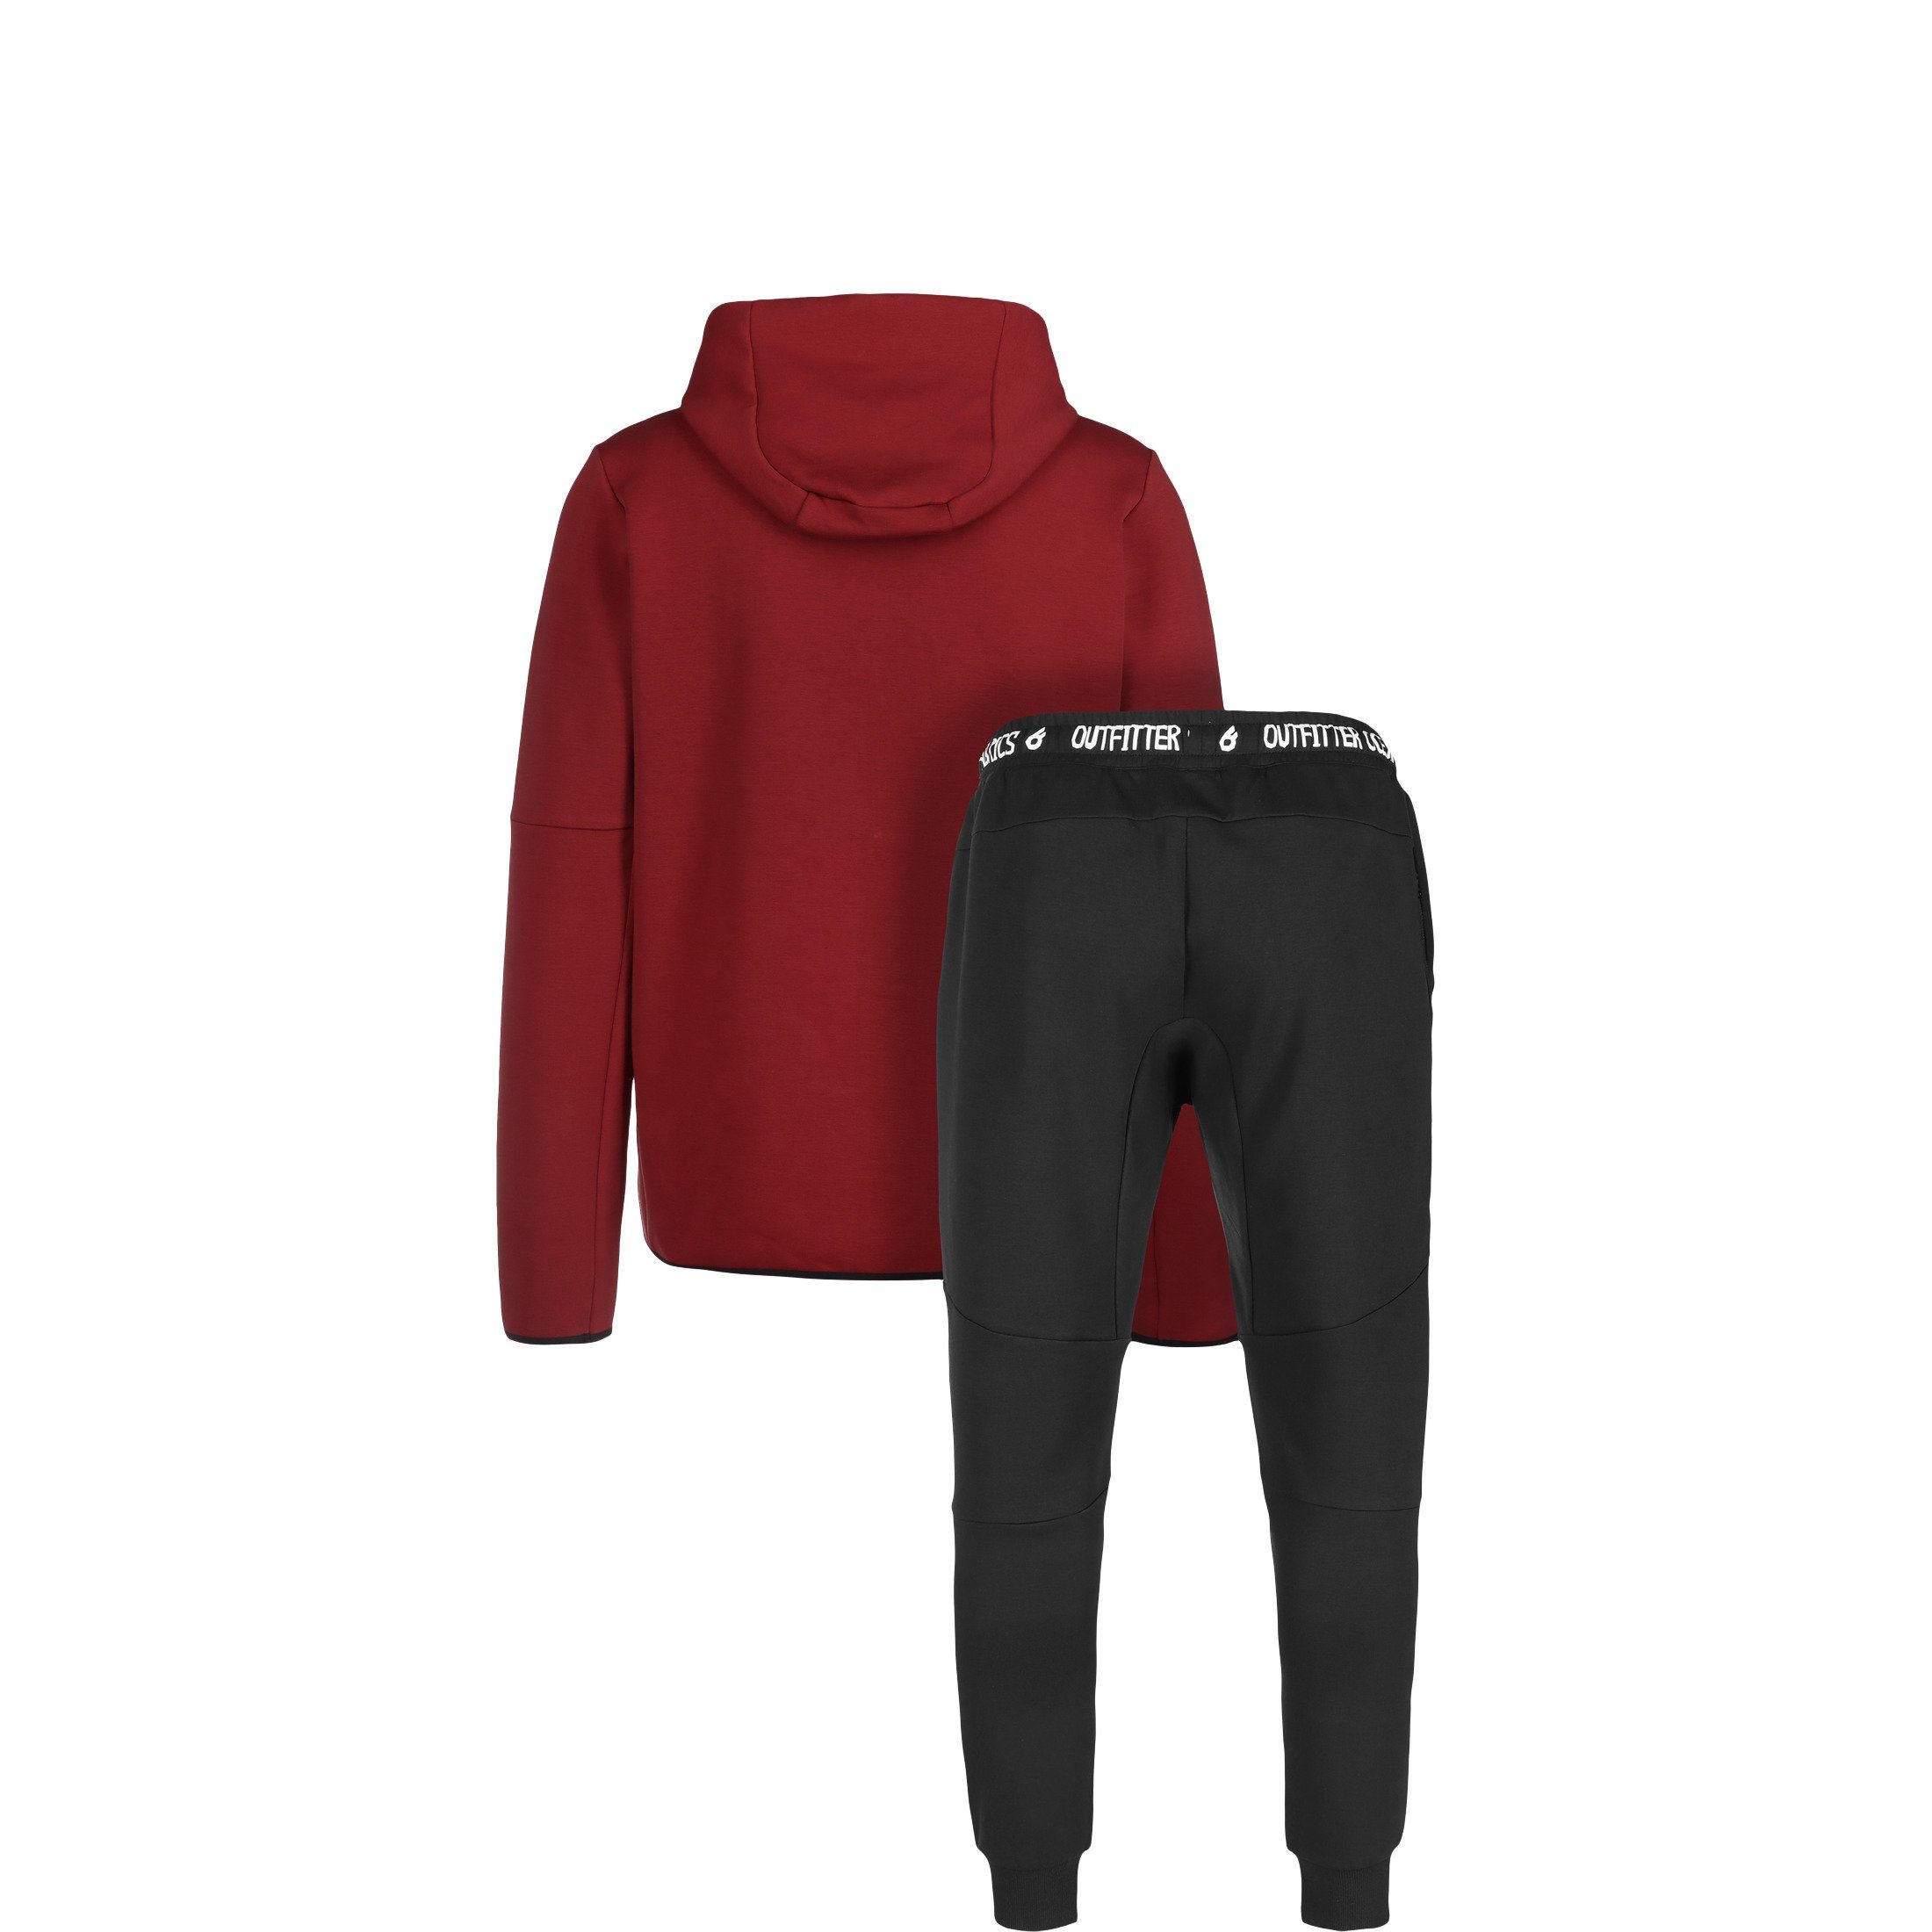 / Outfitter Ocean rot schwarz Trainingsanzug Kinder Jogginganzug Fabrics